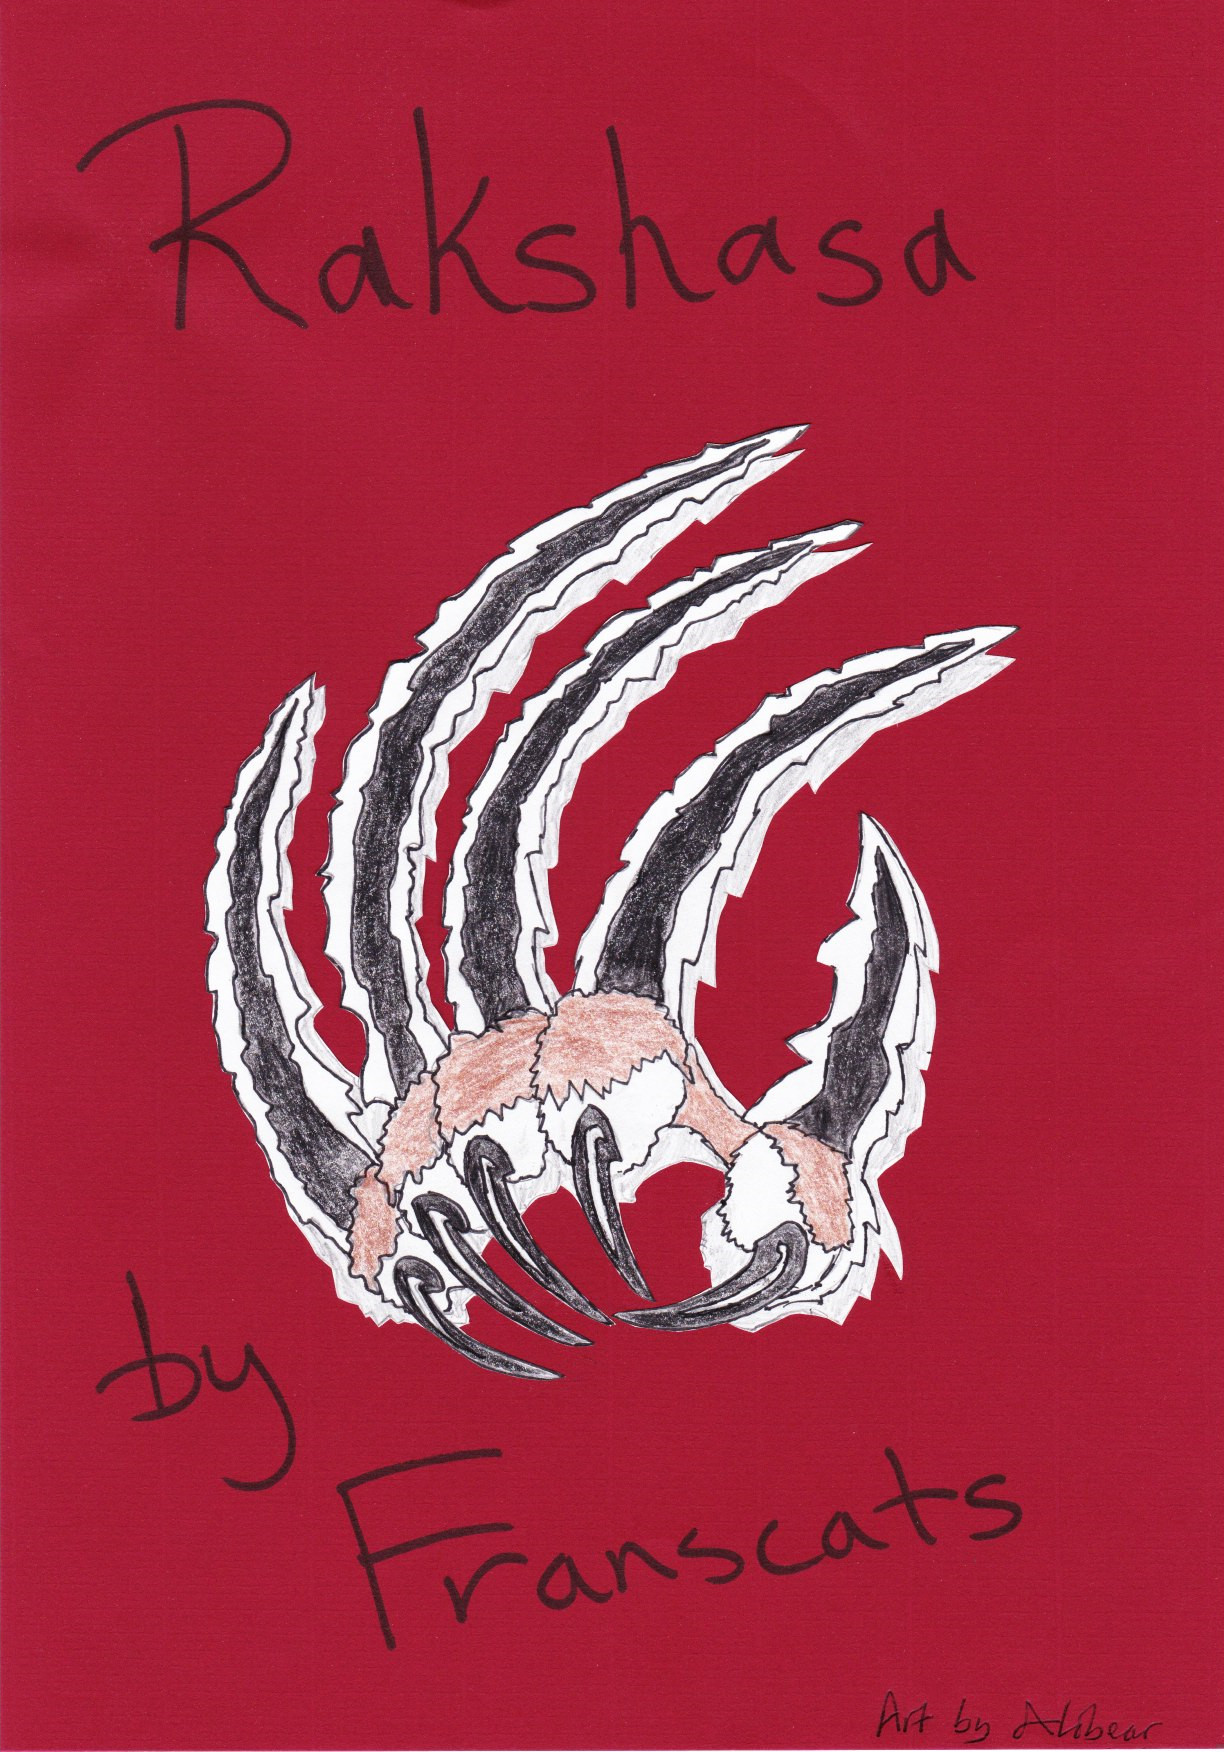 Rakshasa by Fran, illustrated by Alobear